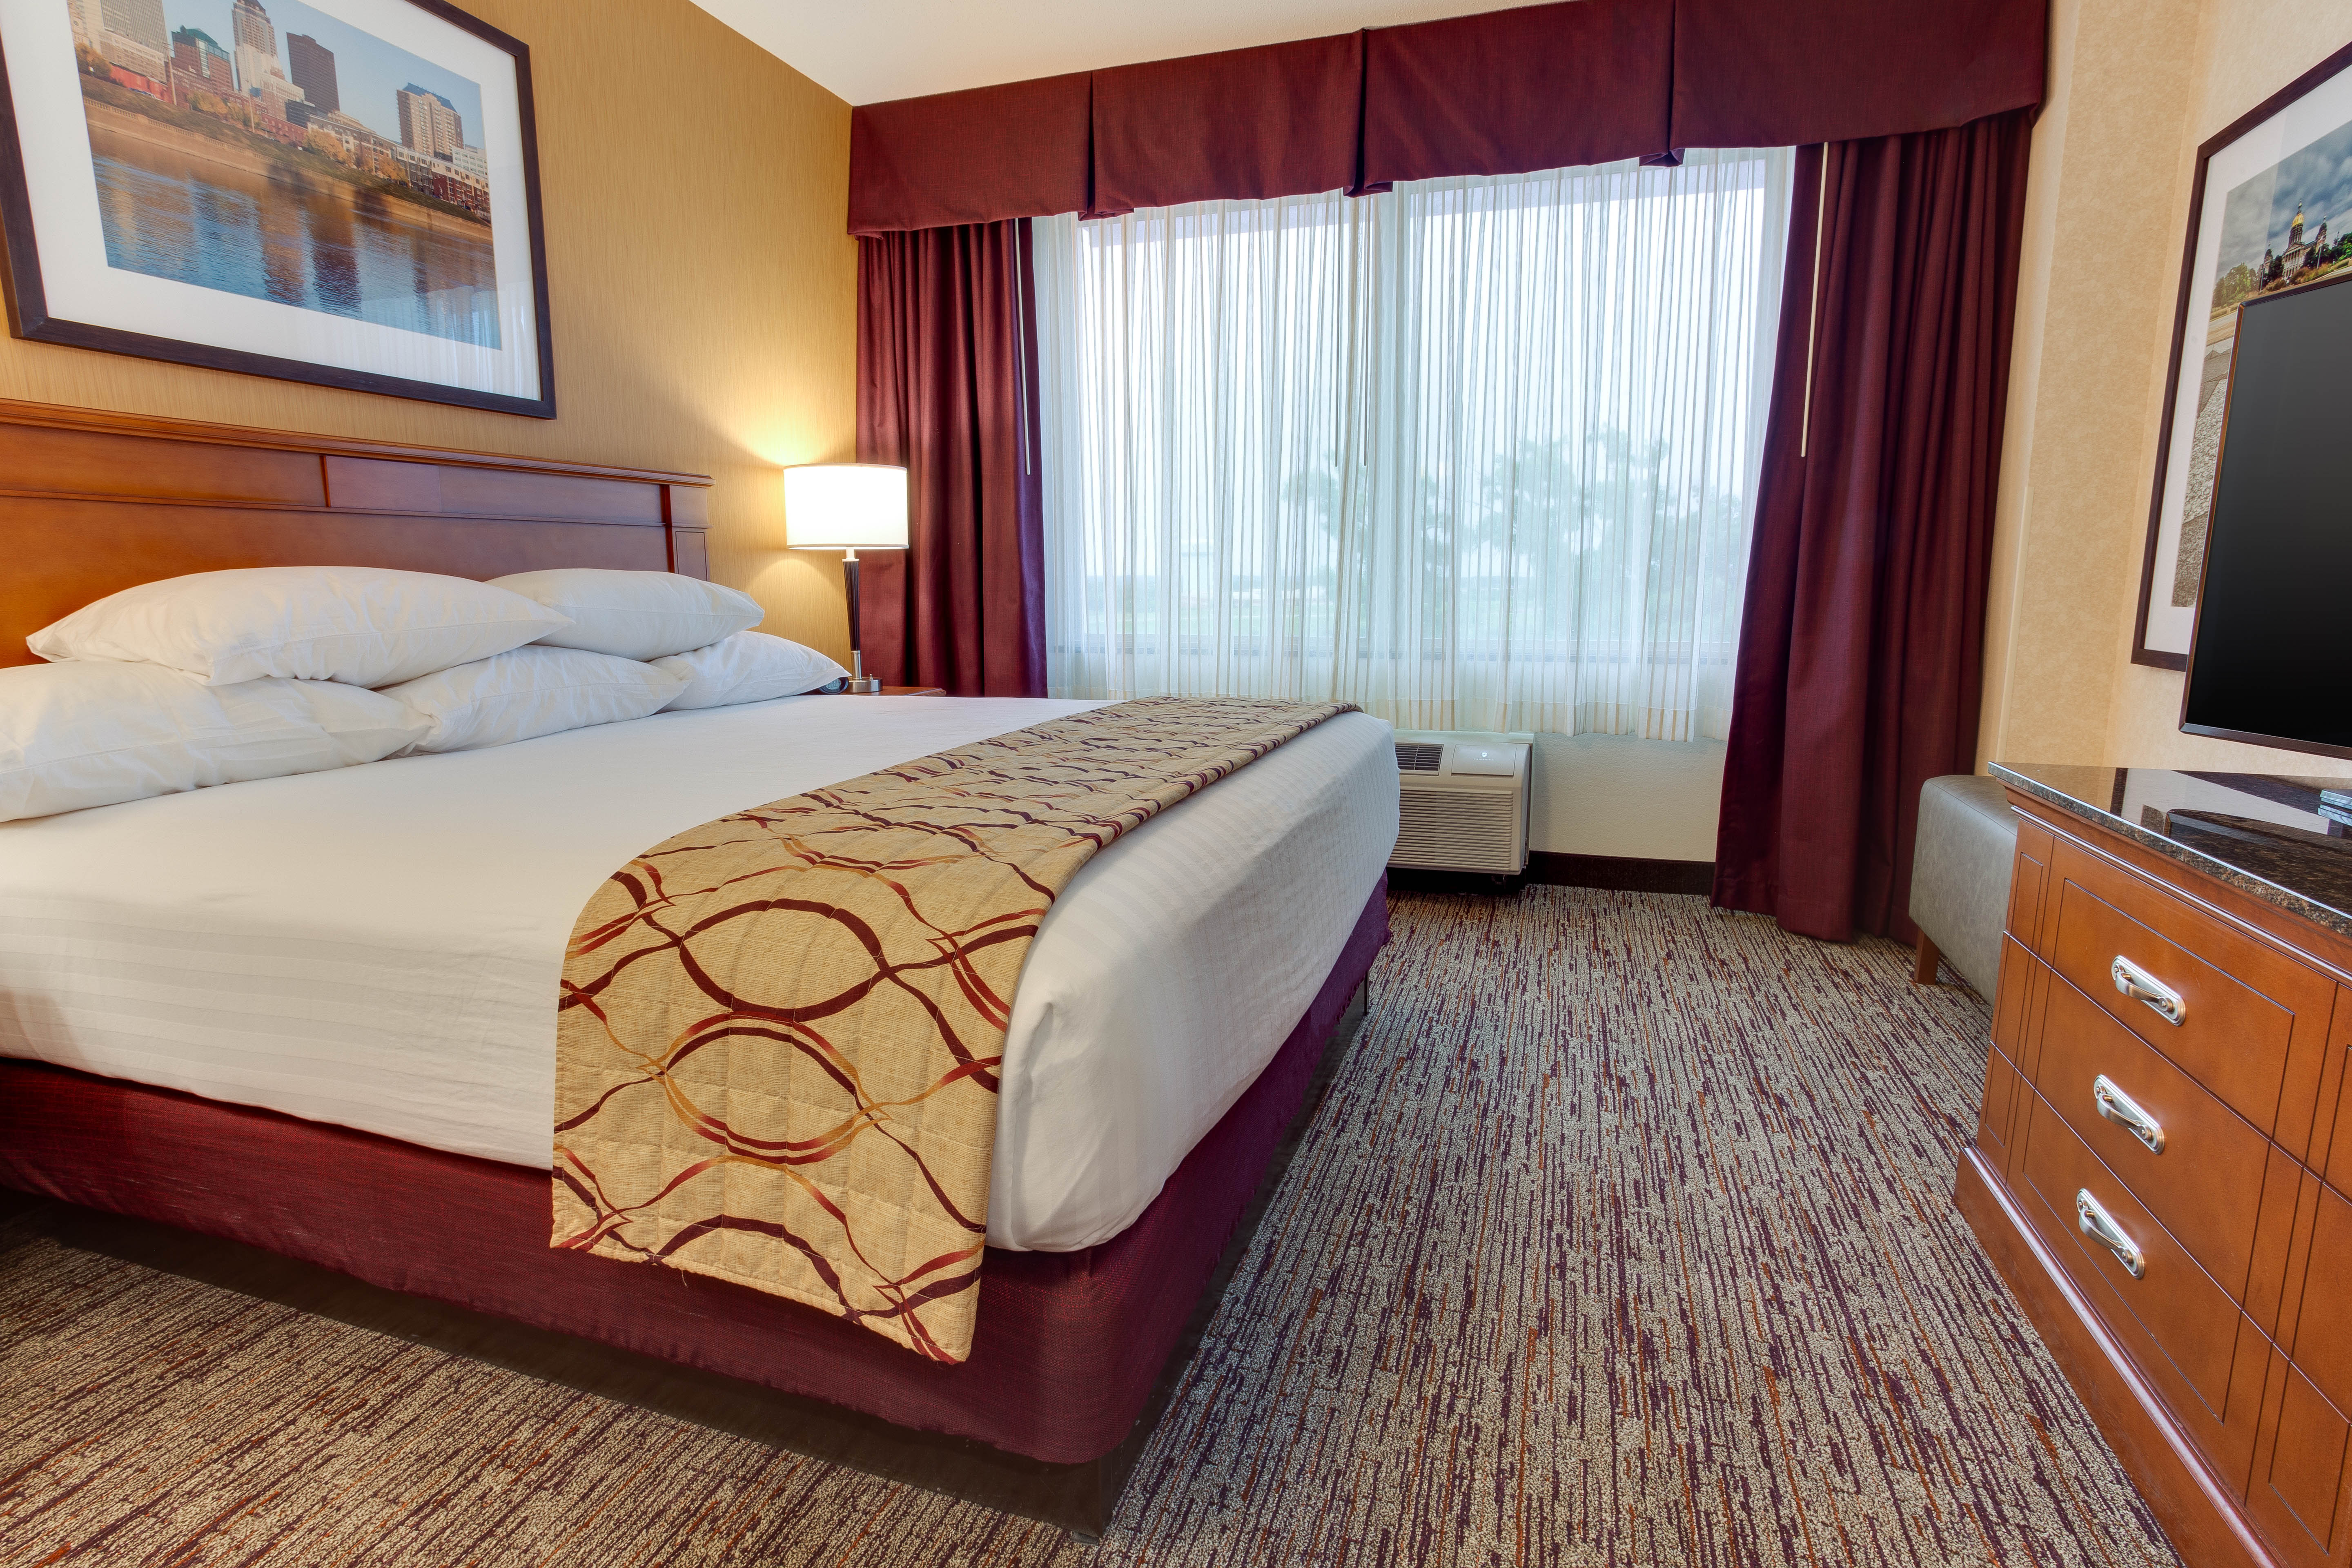 West Des Moines Hotels  Holiday Inn Express & Suites West Des Moines -  Jordan West